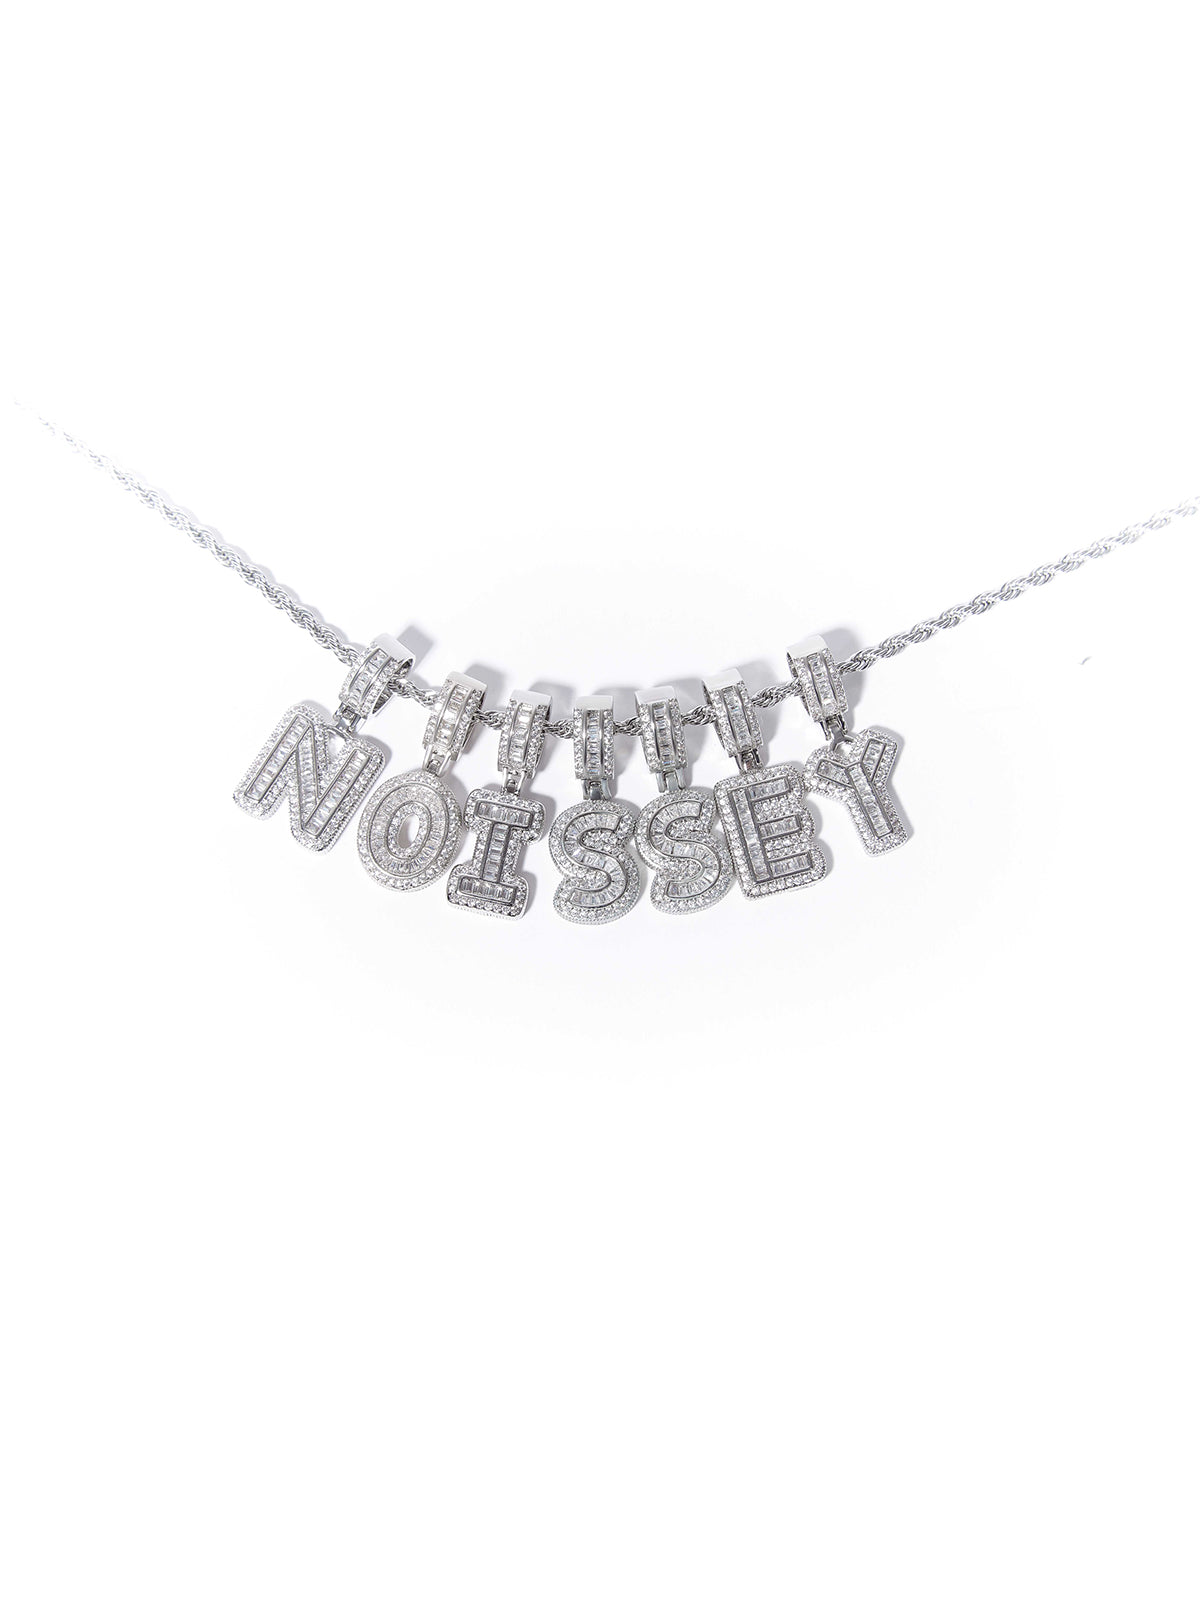 NOISSEY Full Pave-Halskette